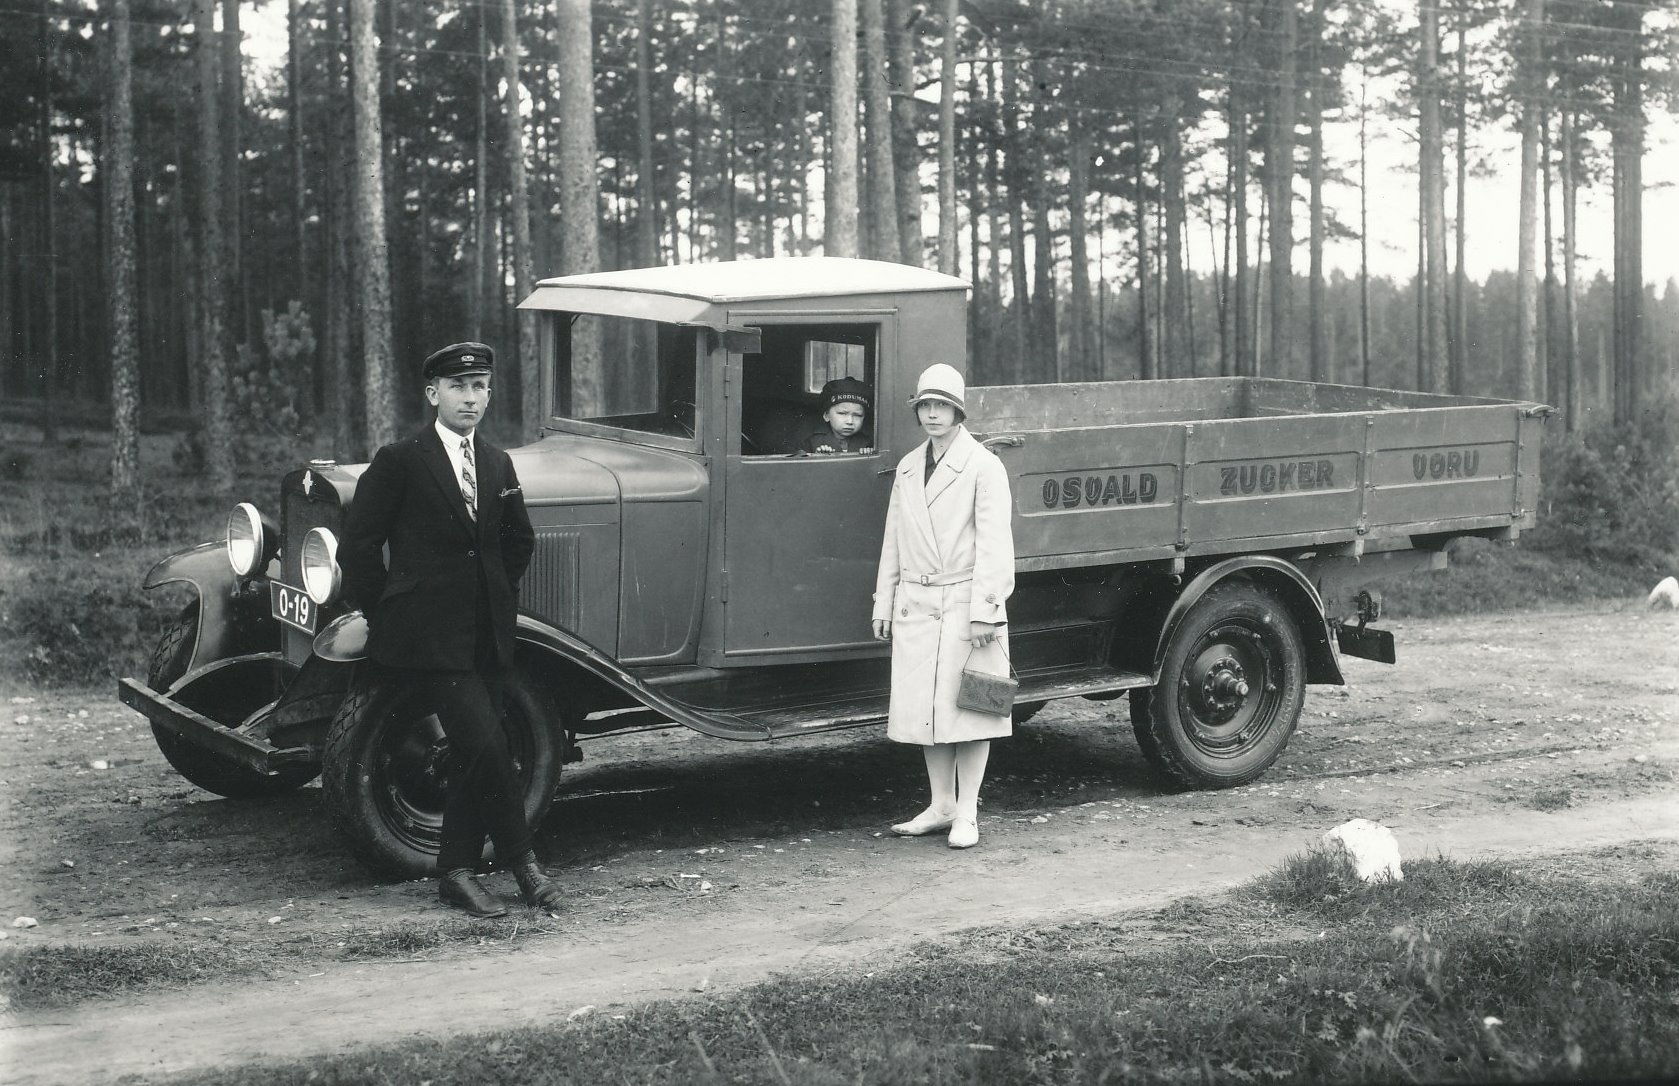 Foto. Zuker, Osvaldi veoauto Chevrolet 0-19  1931.a. ( fotol omanik, abikaasa ja laps.)